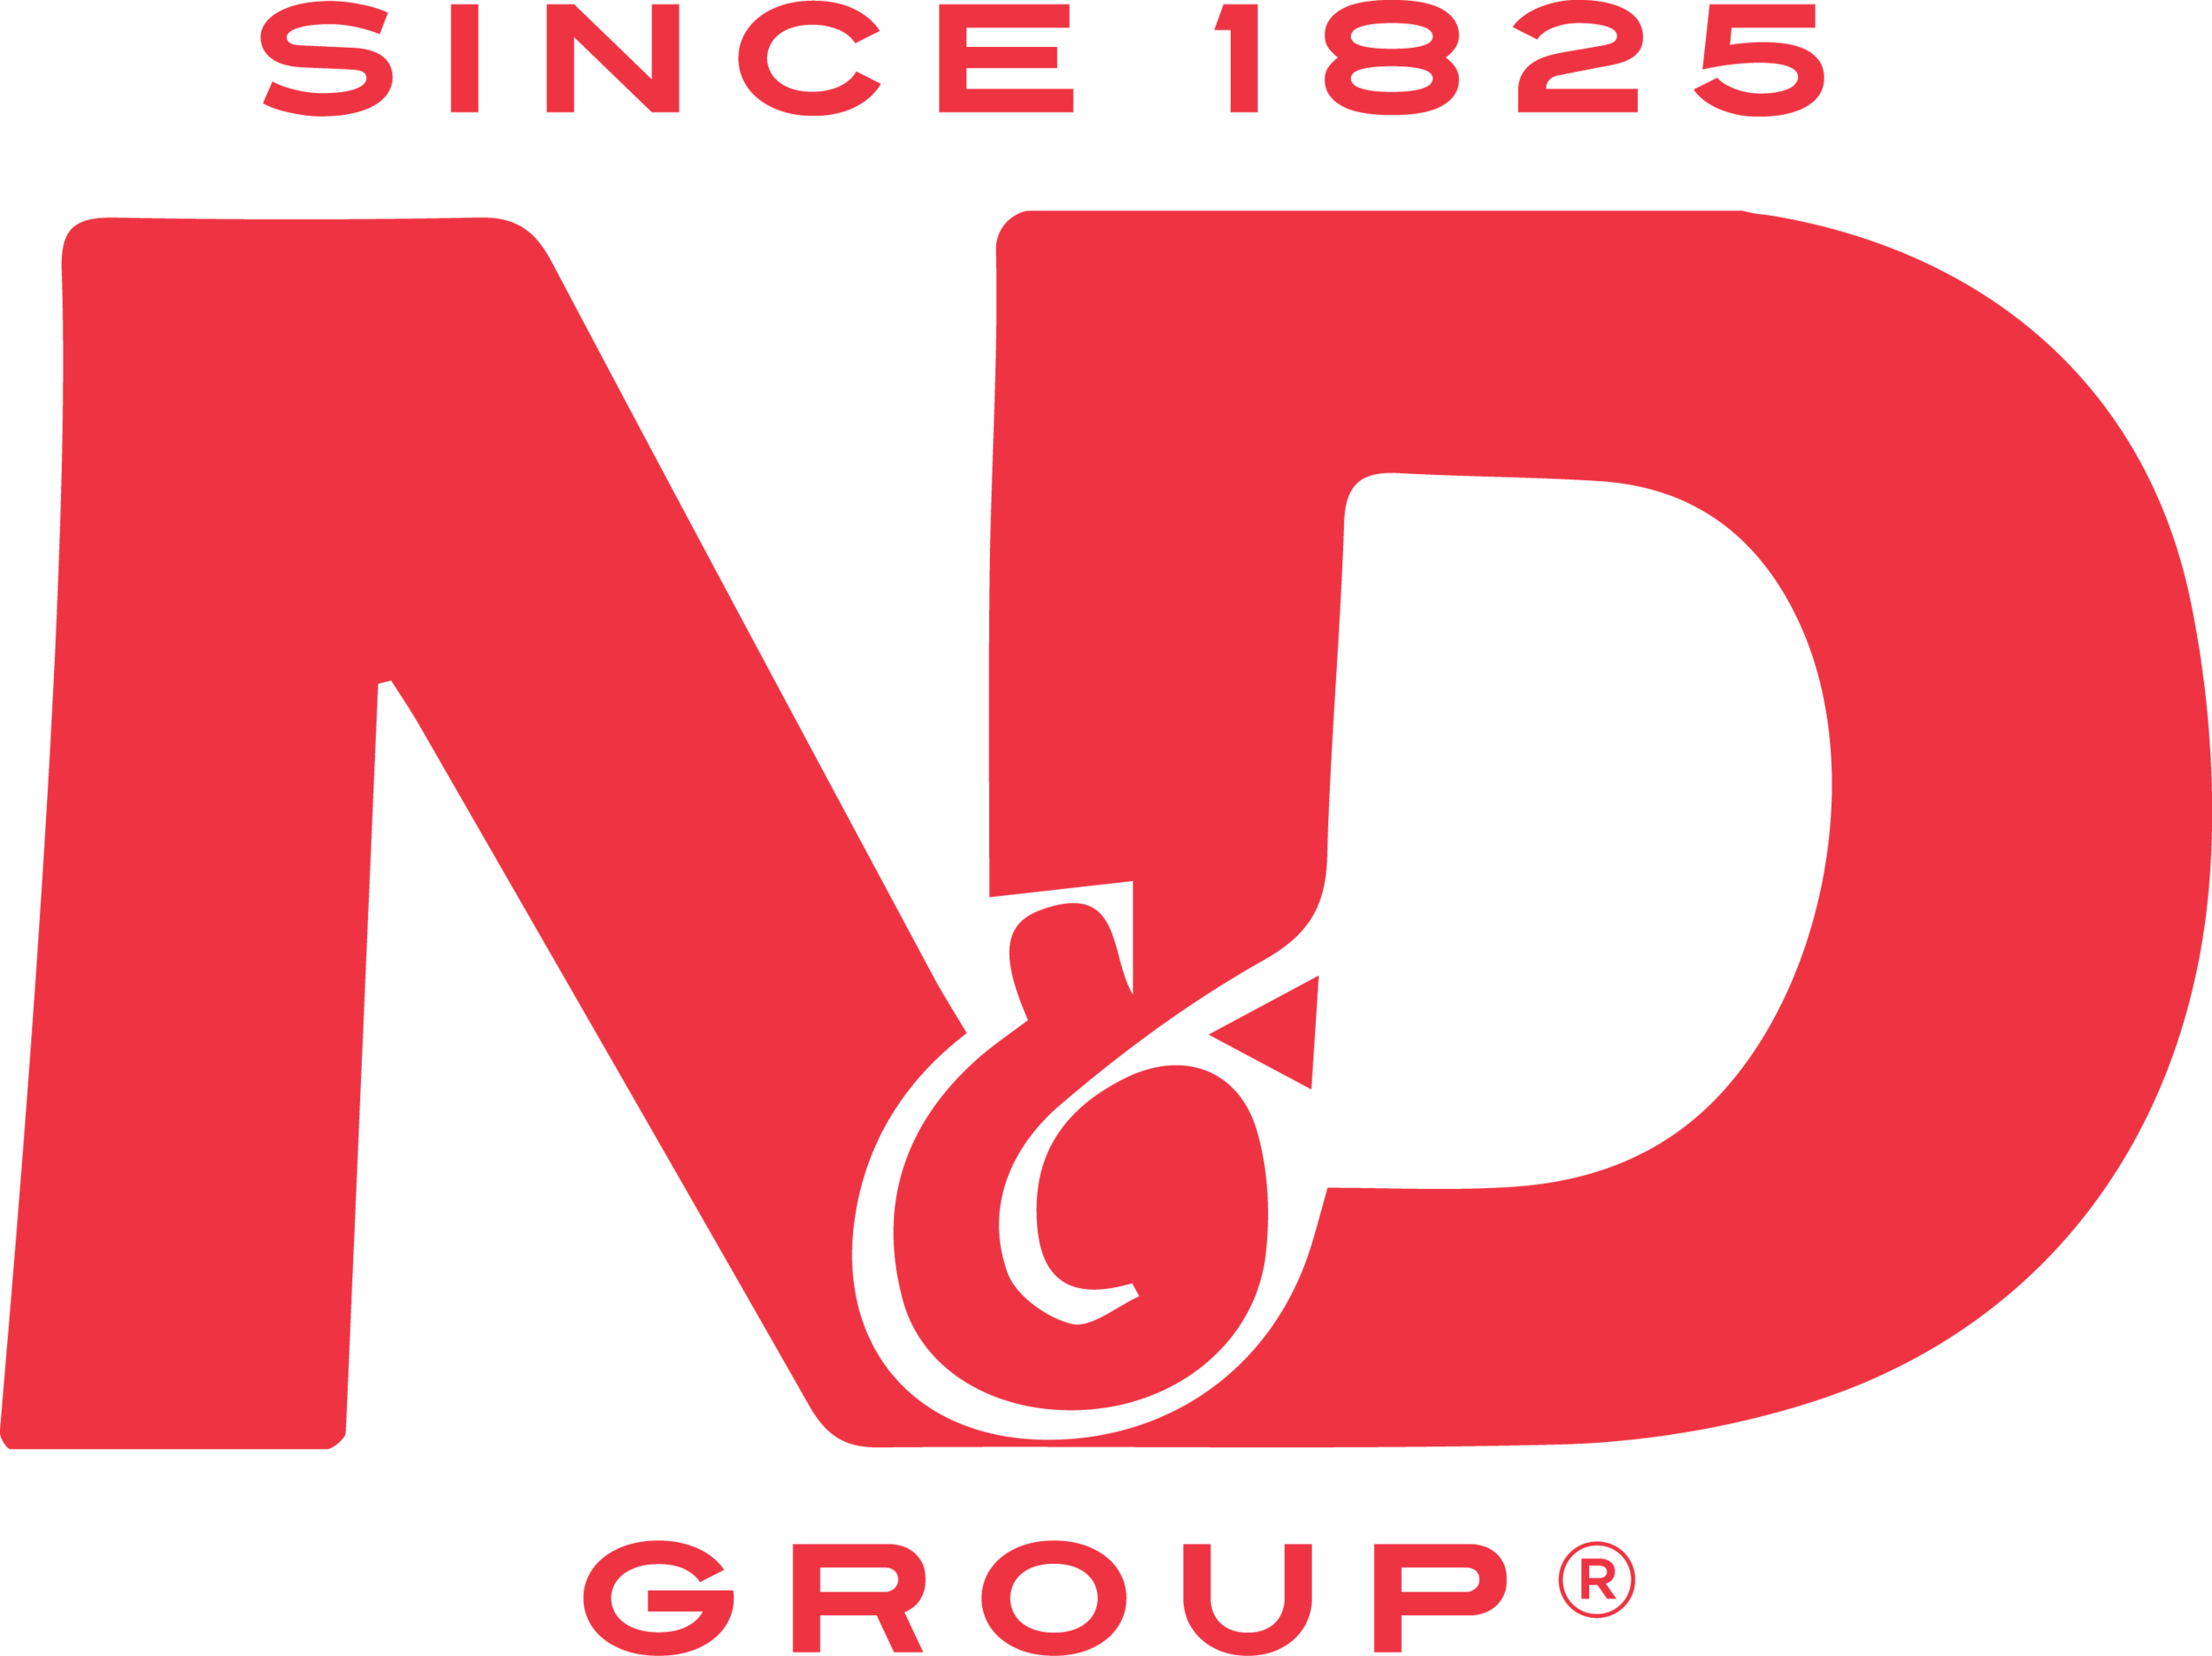 ND Group 2015 Pantone Red 032 C.png